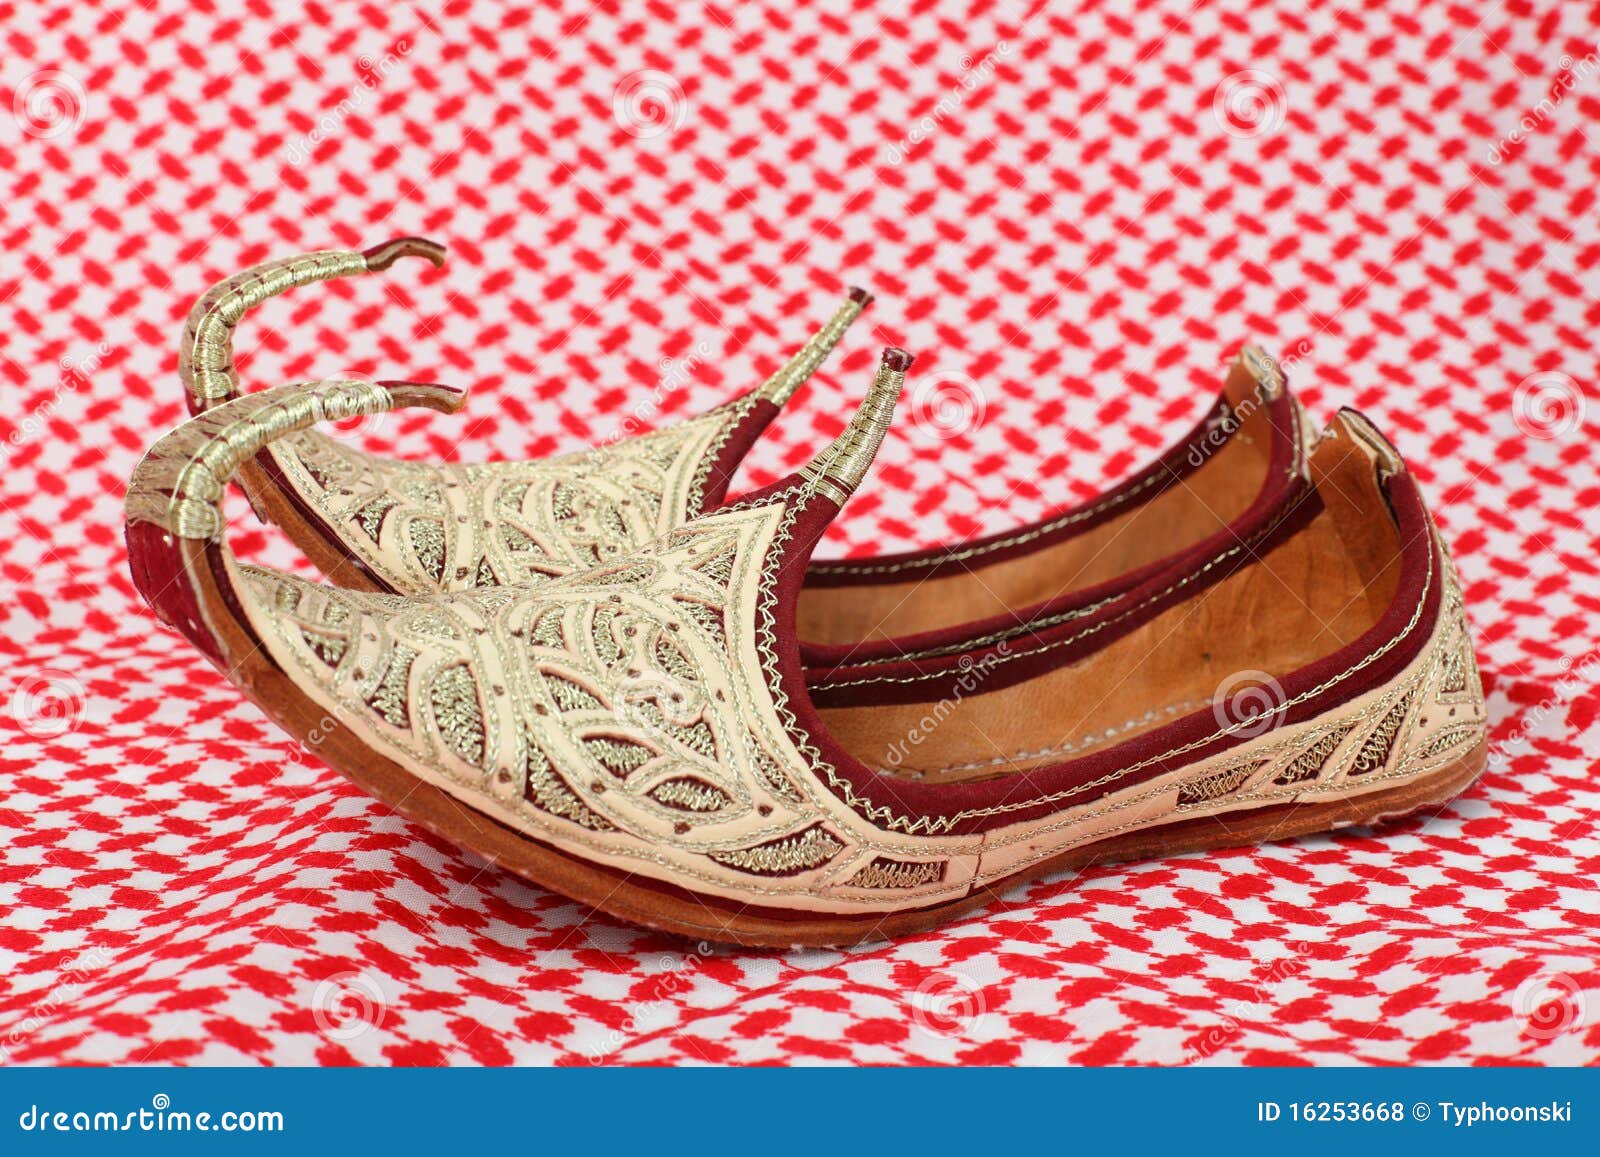 Arabic shoes stock photo. Image of shoes, sharjah, dubai - 16253668